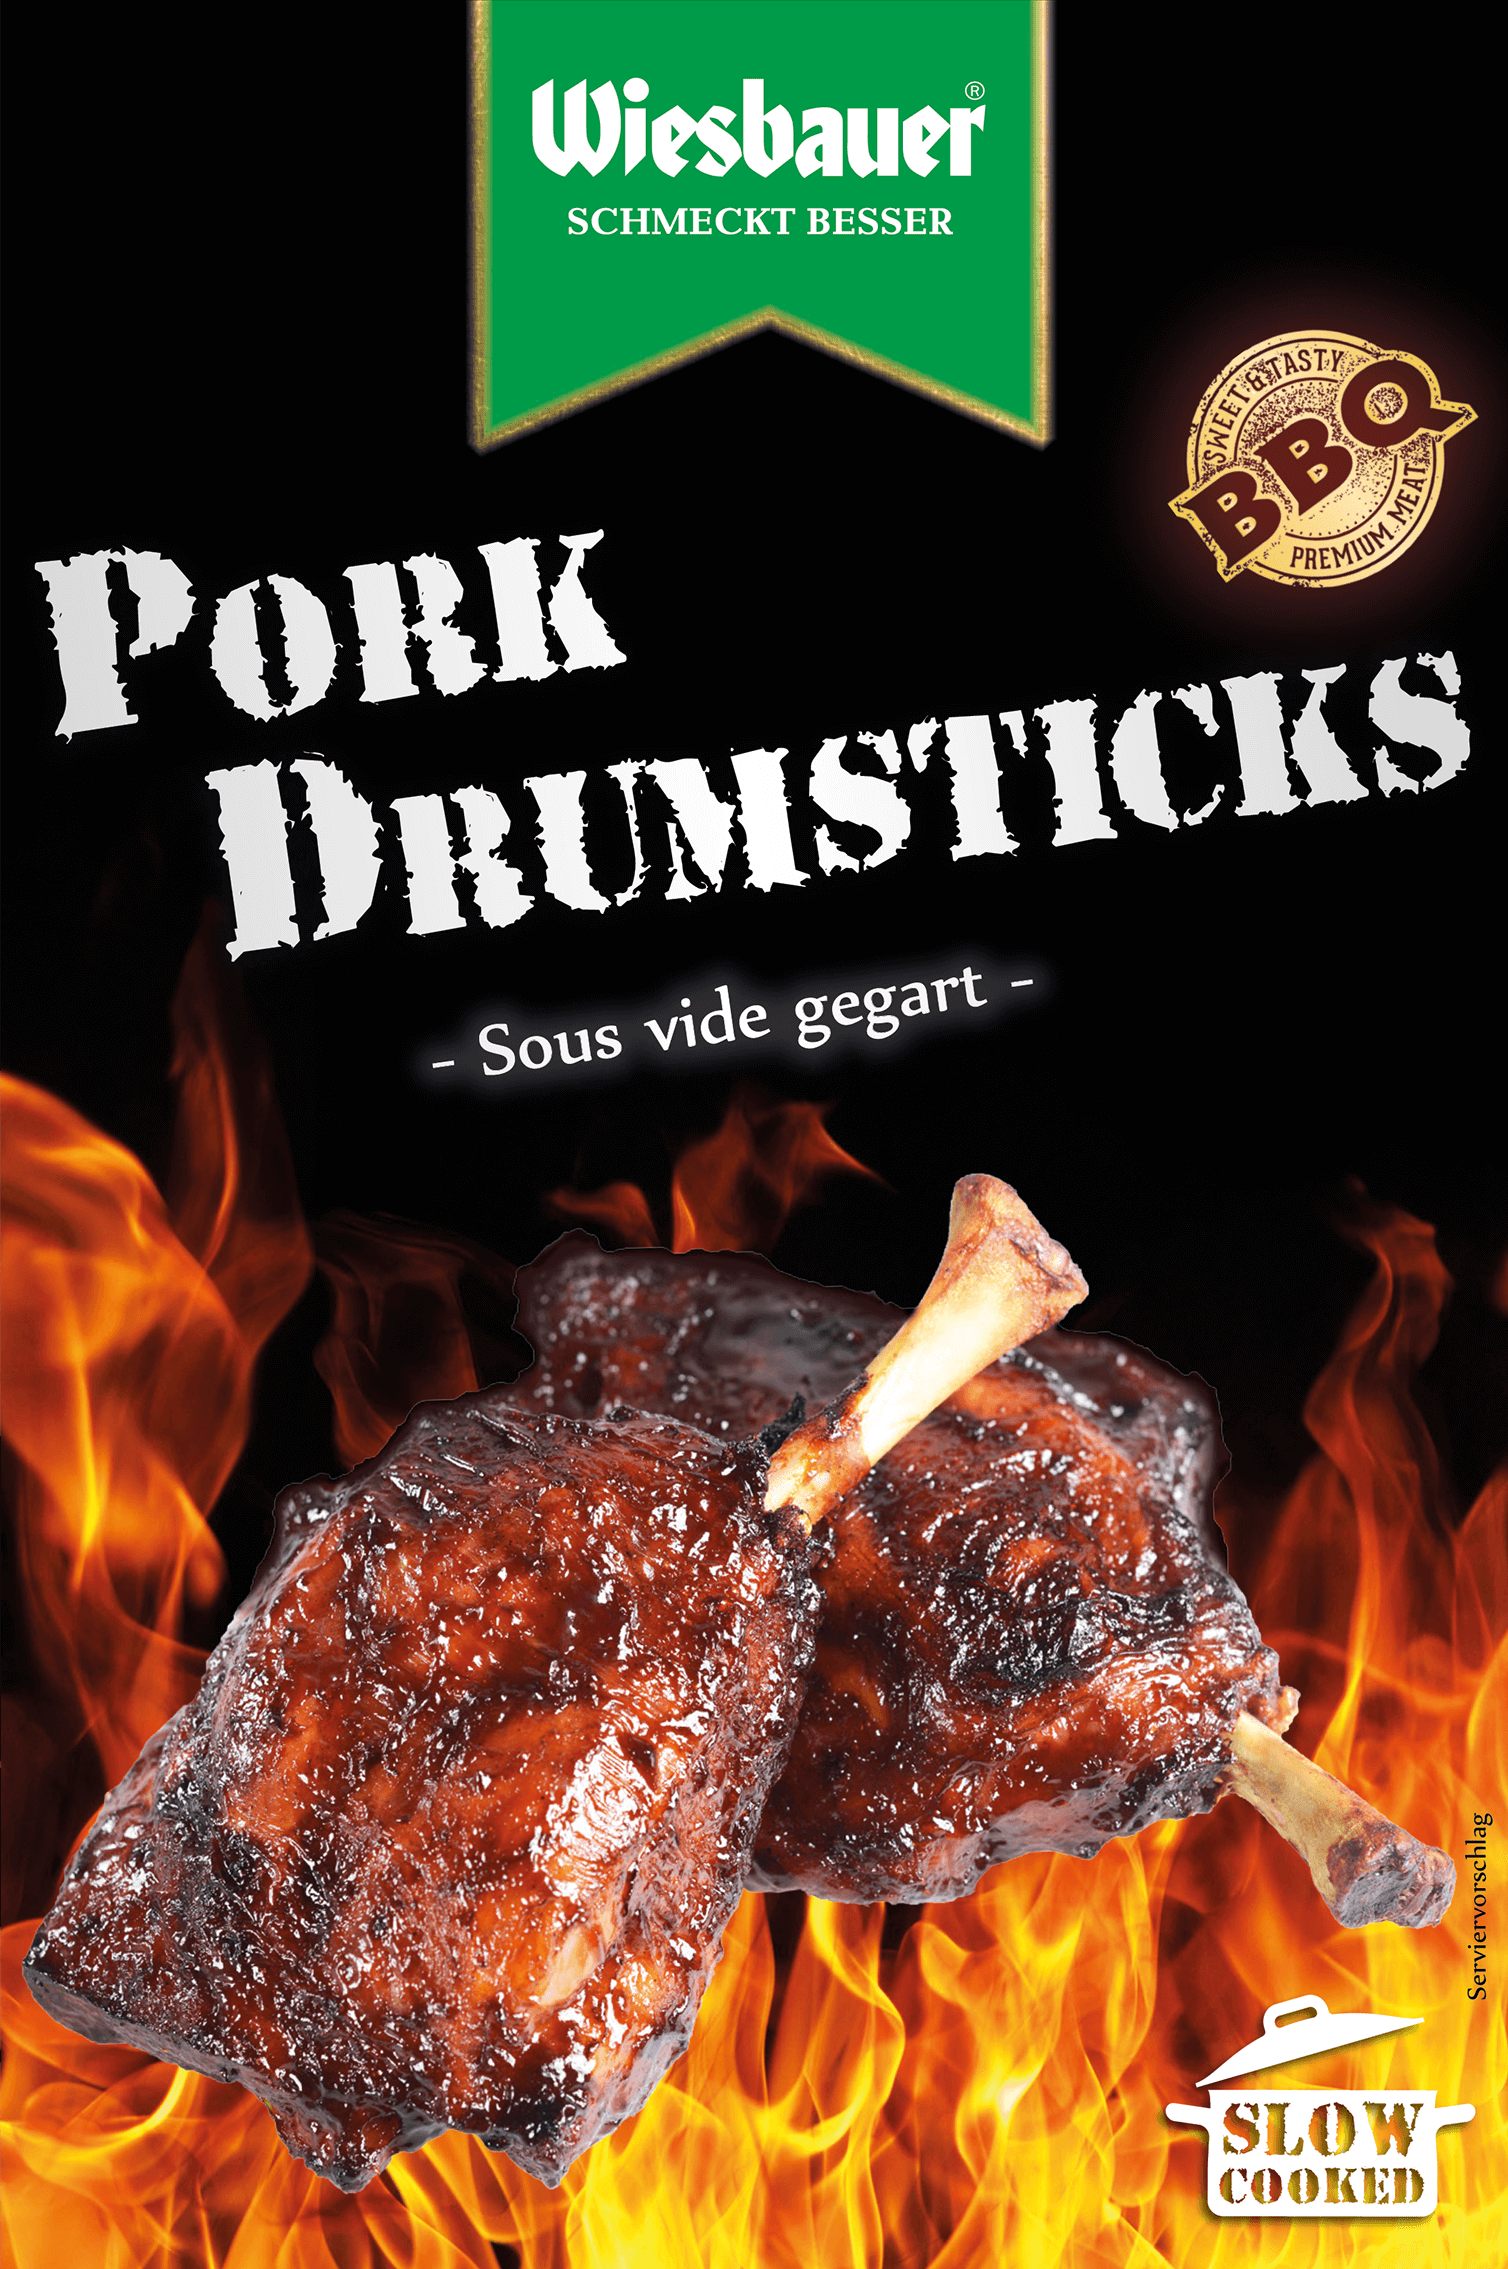 BBQ Pork Drumsticks